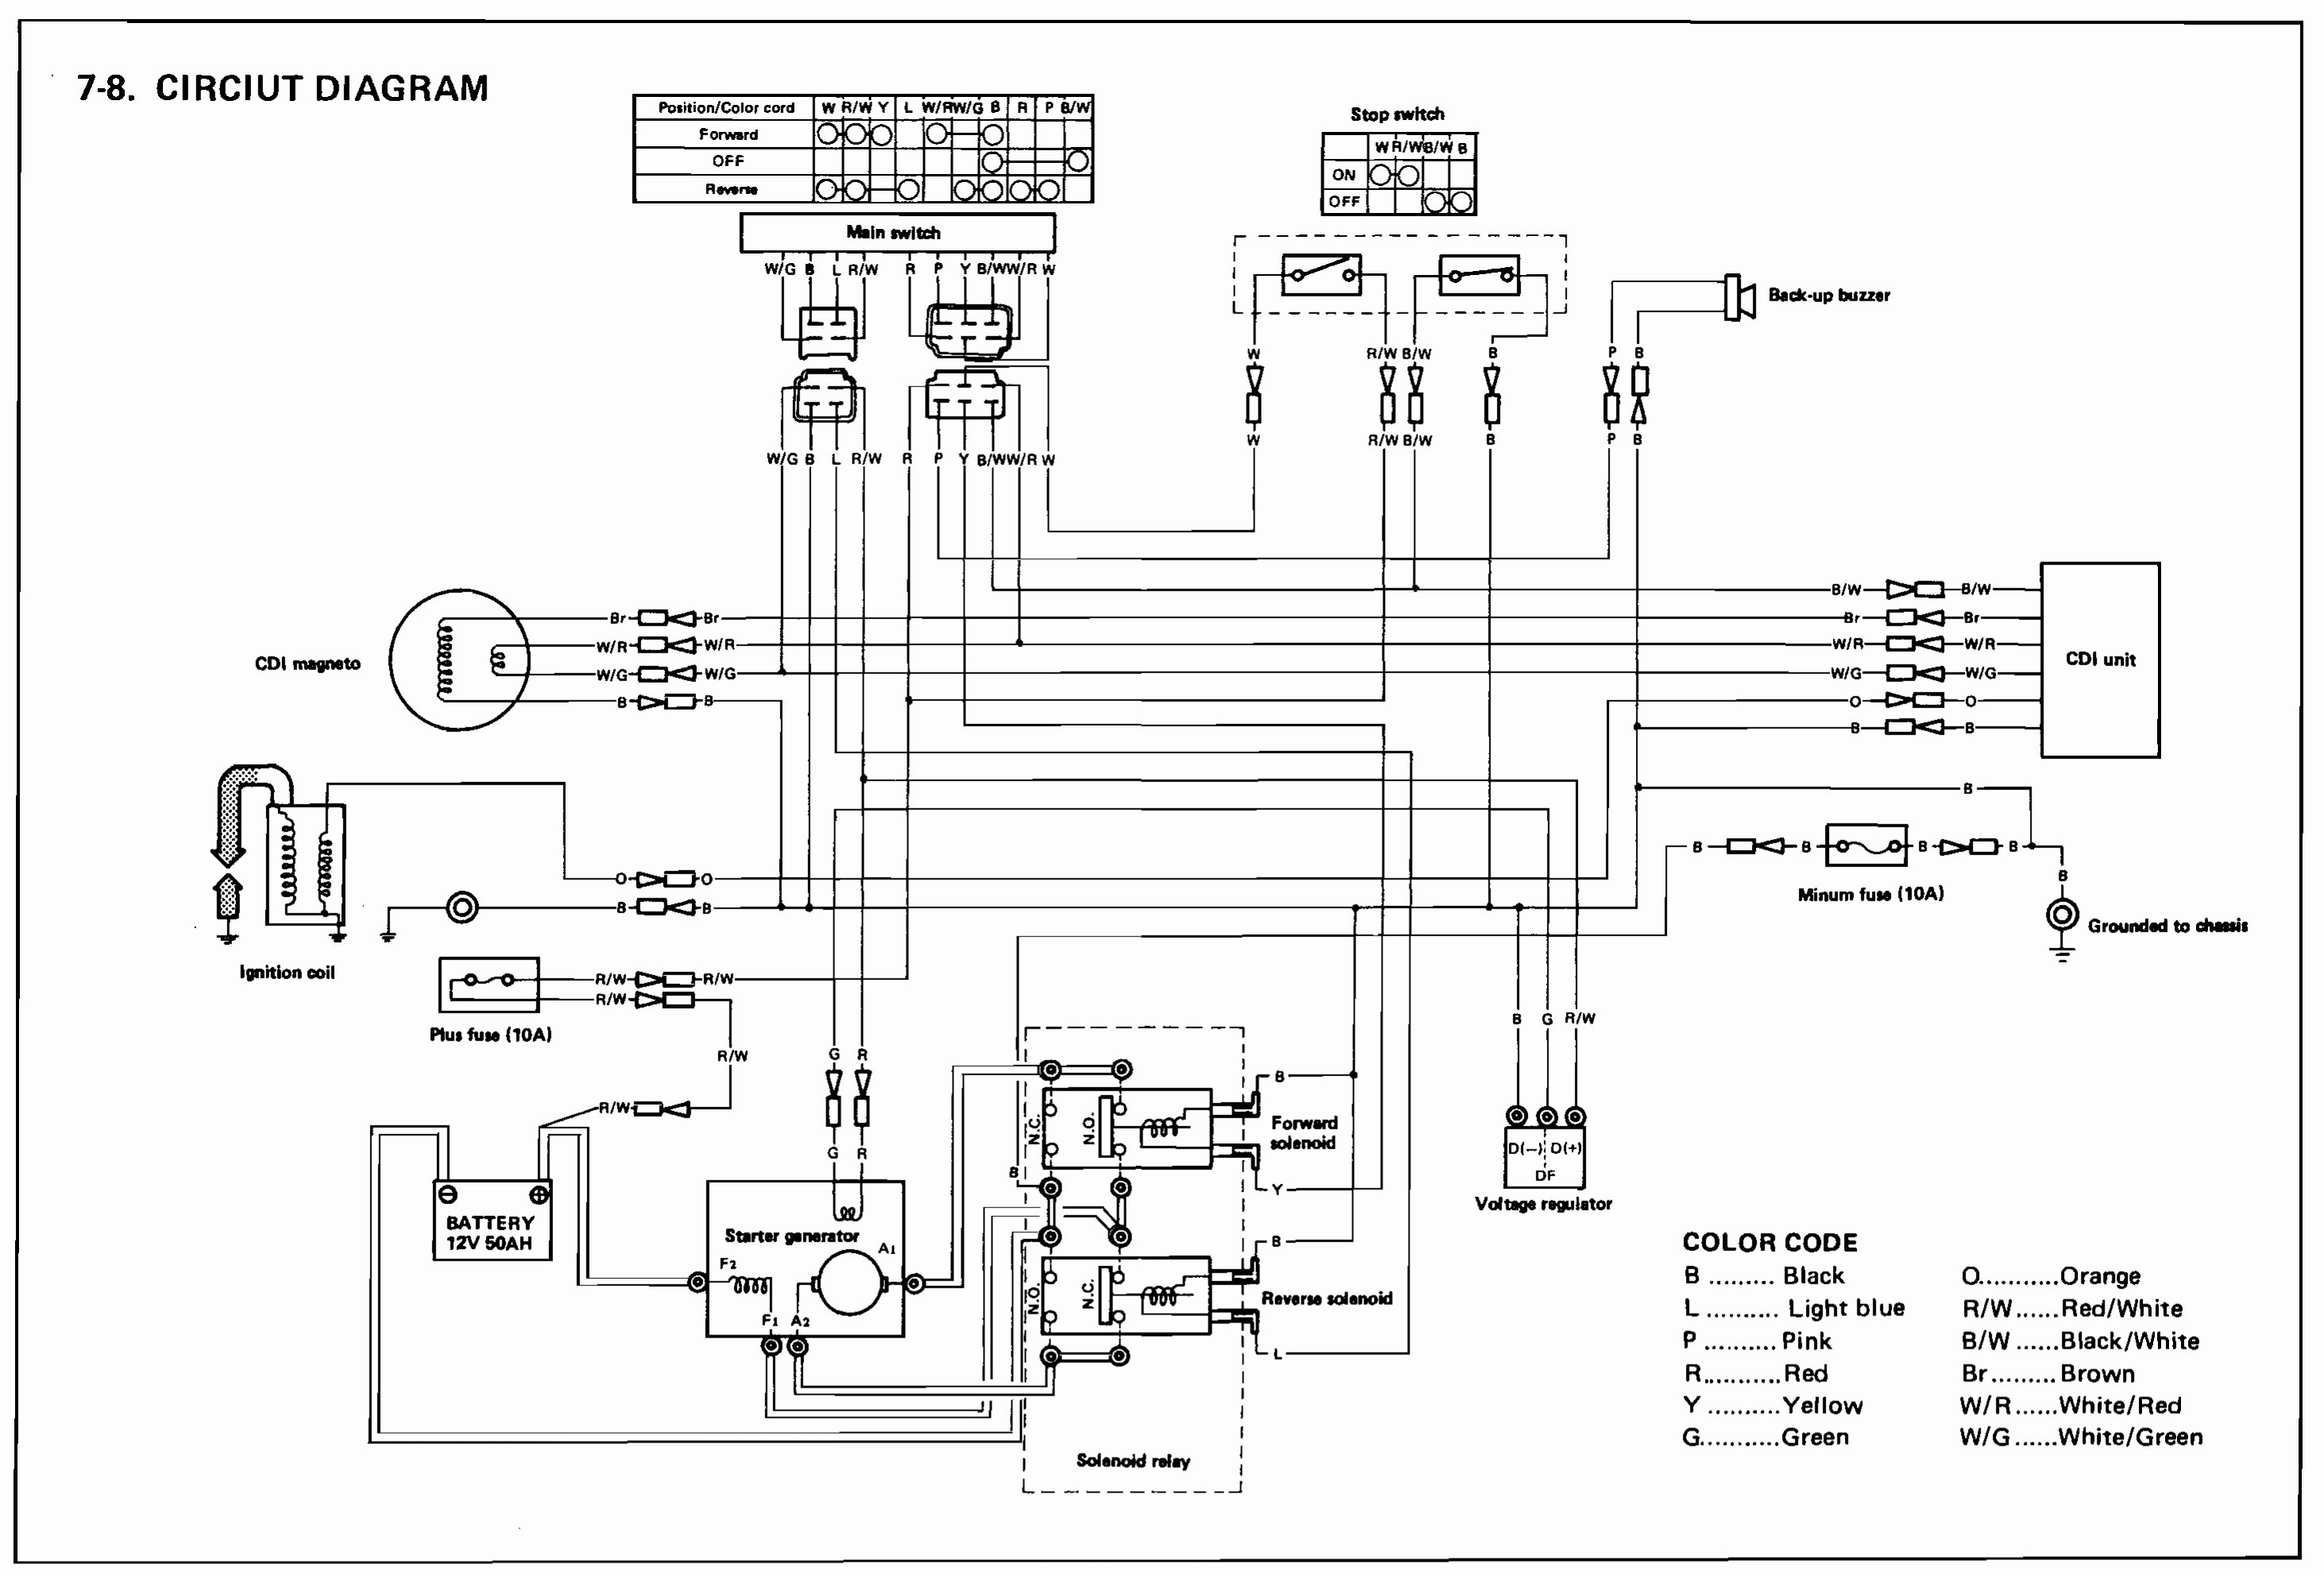 Wiring Diagram for Club Car Starter Generator New Starter Generator Wiring Diagram Club Car Best Wiring